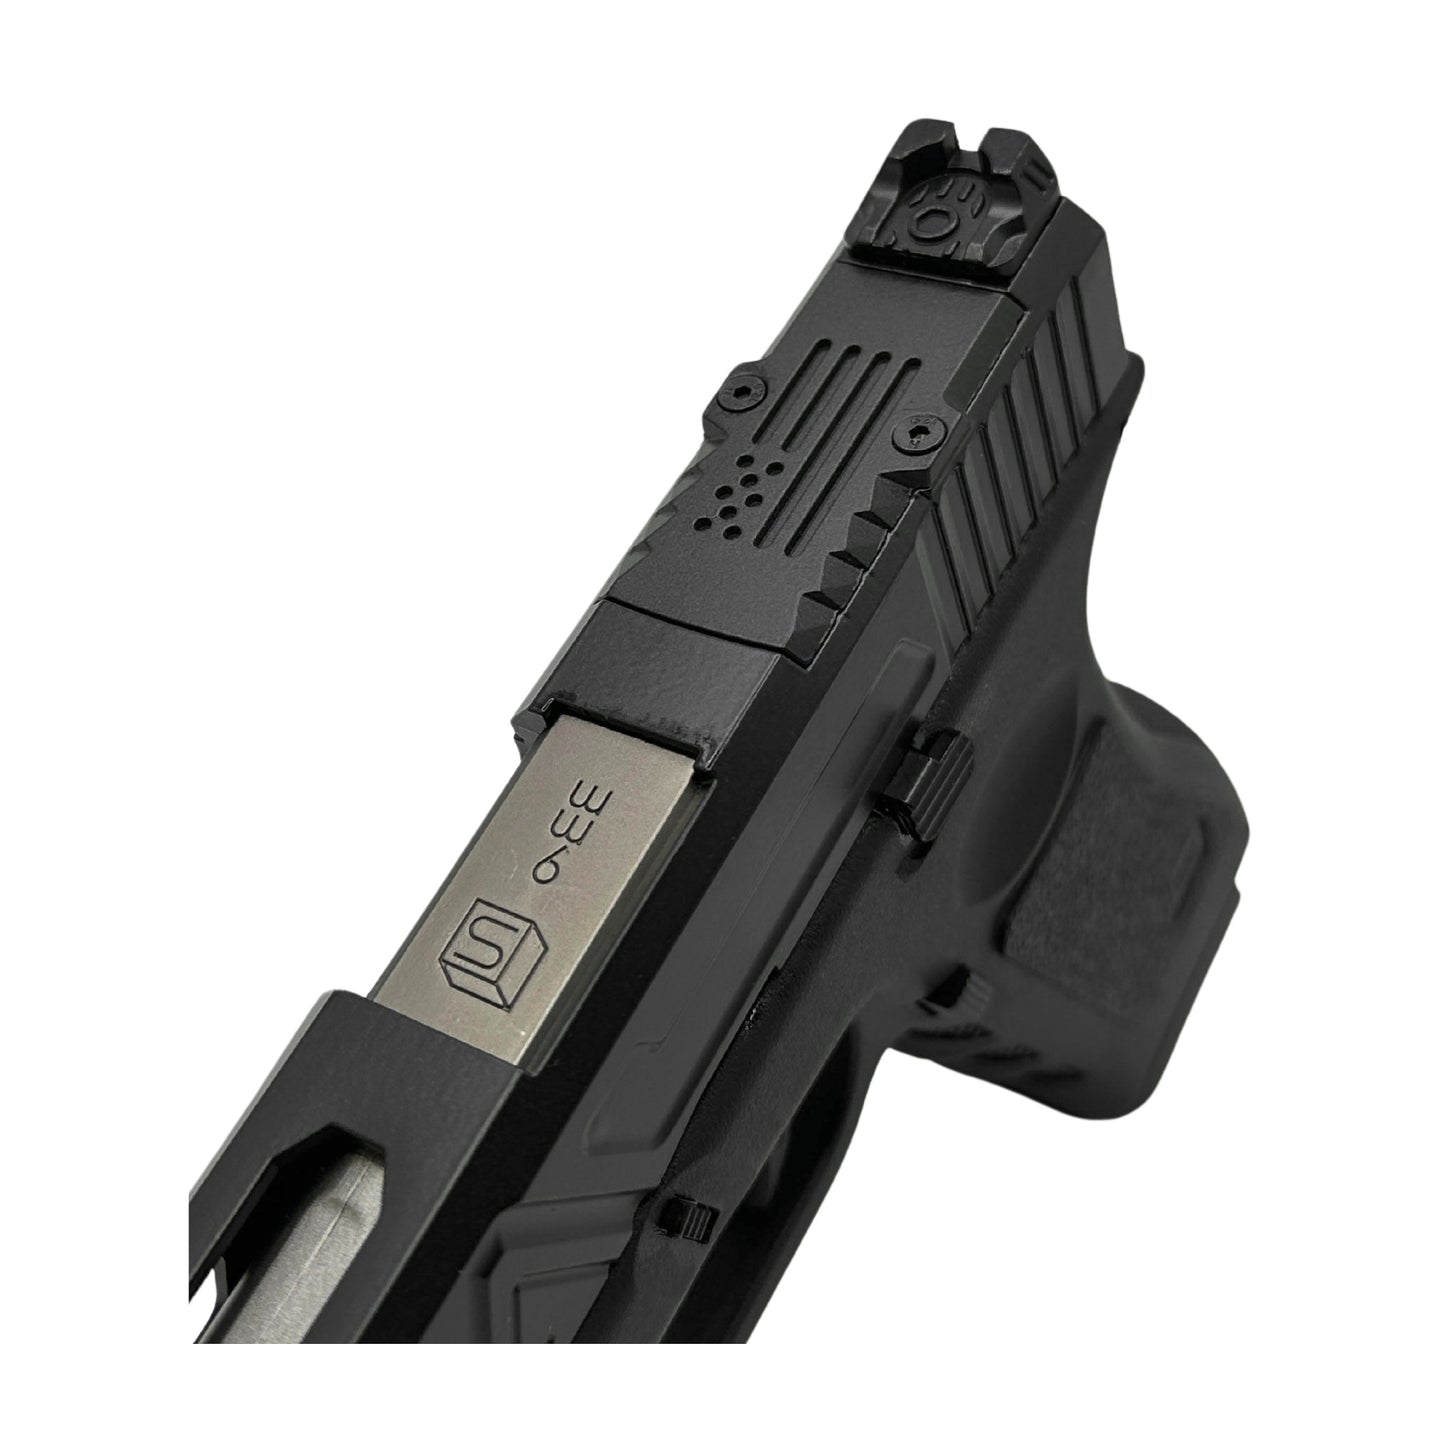 SAI G17 Metal Tactical Manual Pistol - Gel Blaster